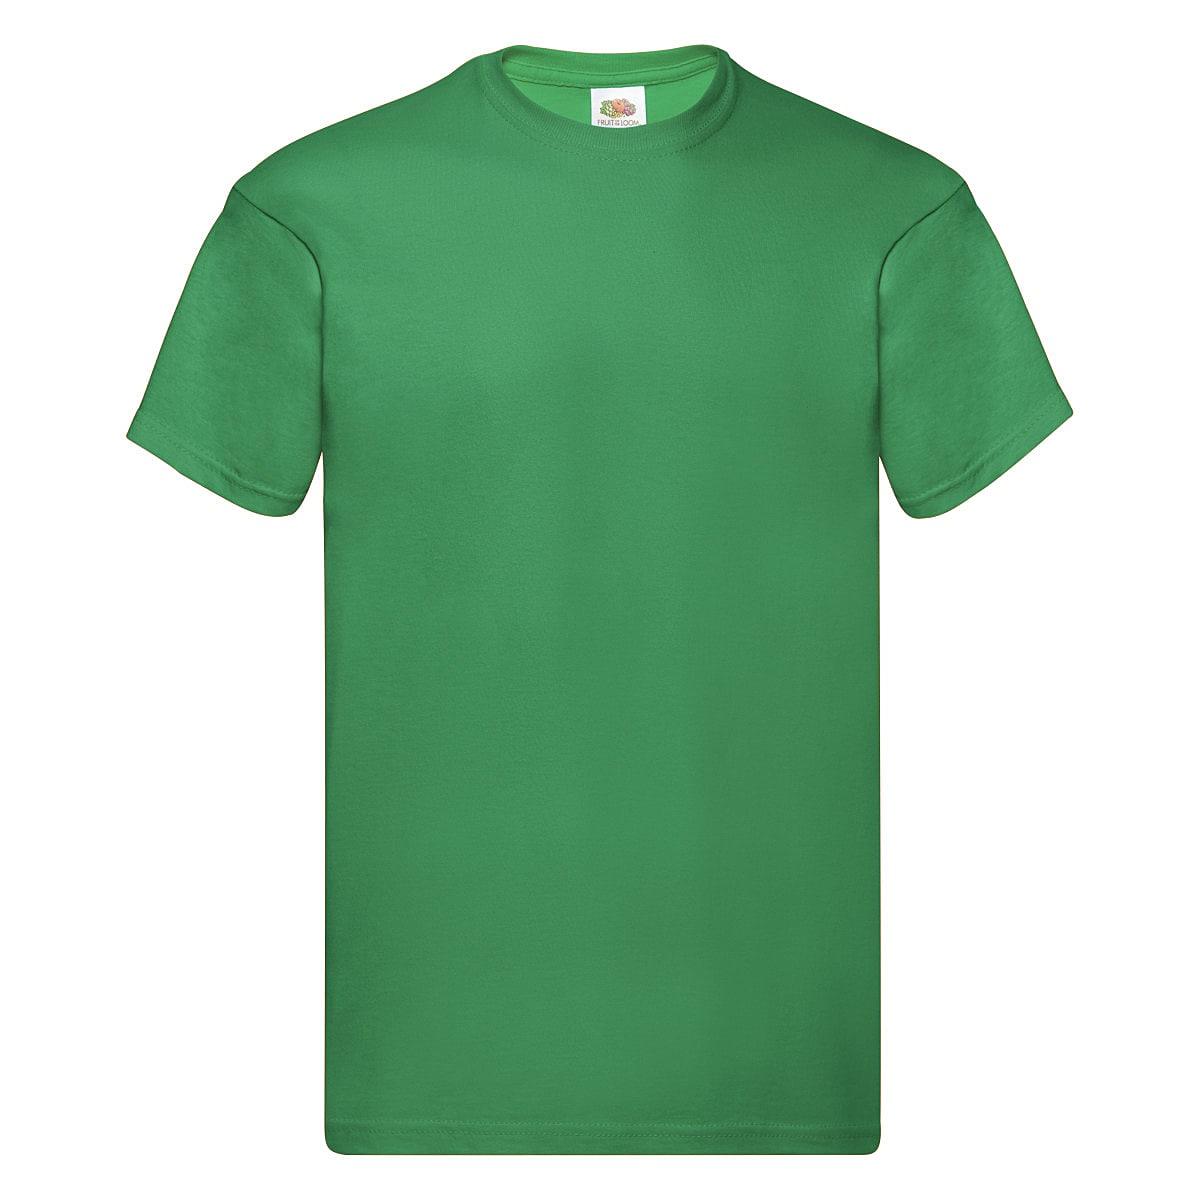 Fruit Of The Loom Original Full Cut T-Shirt in Kelly Green (Product Code: 61082)